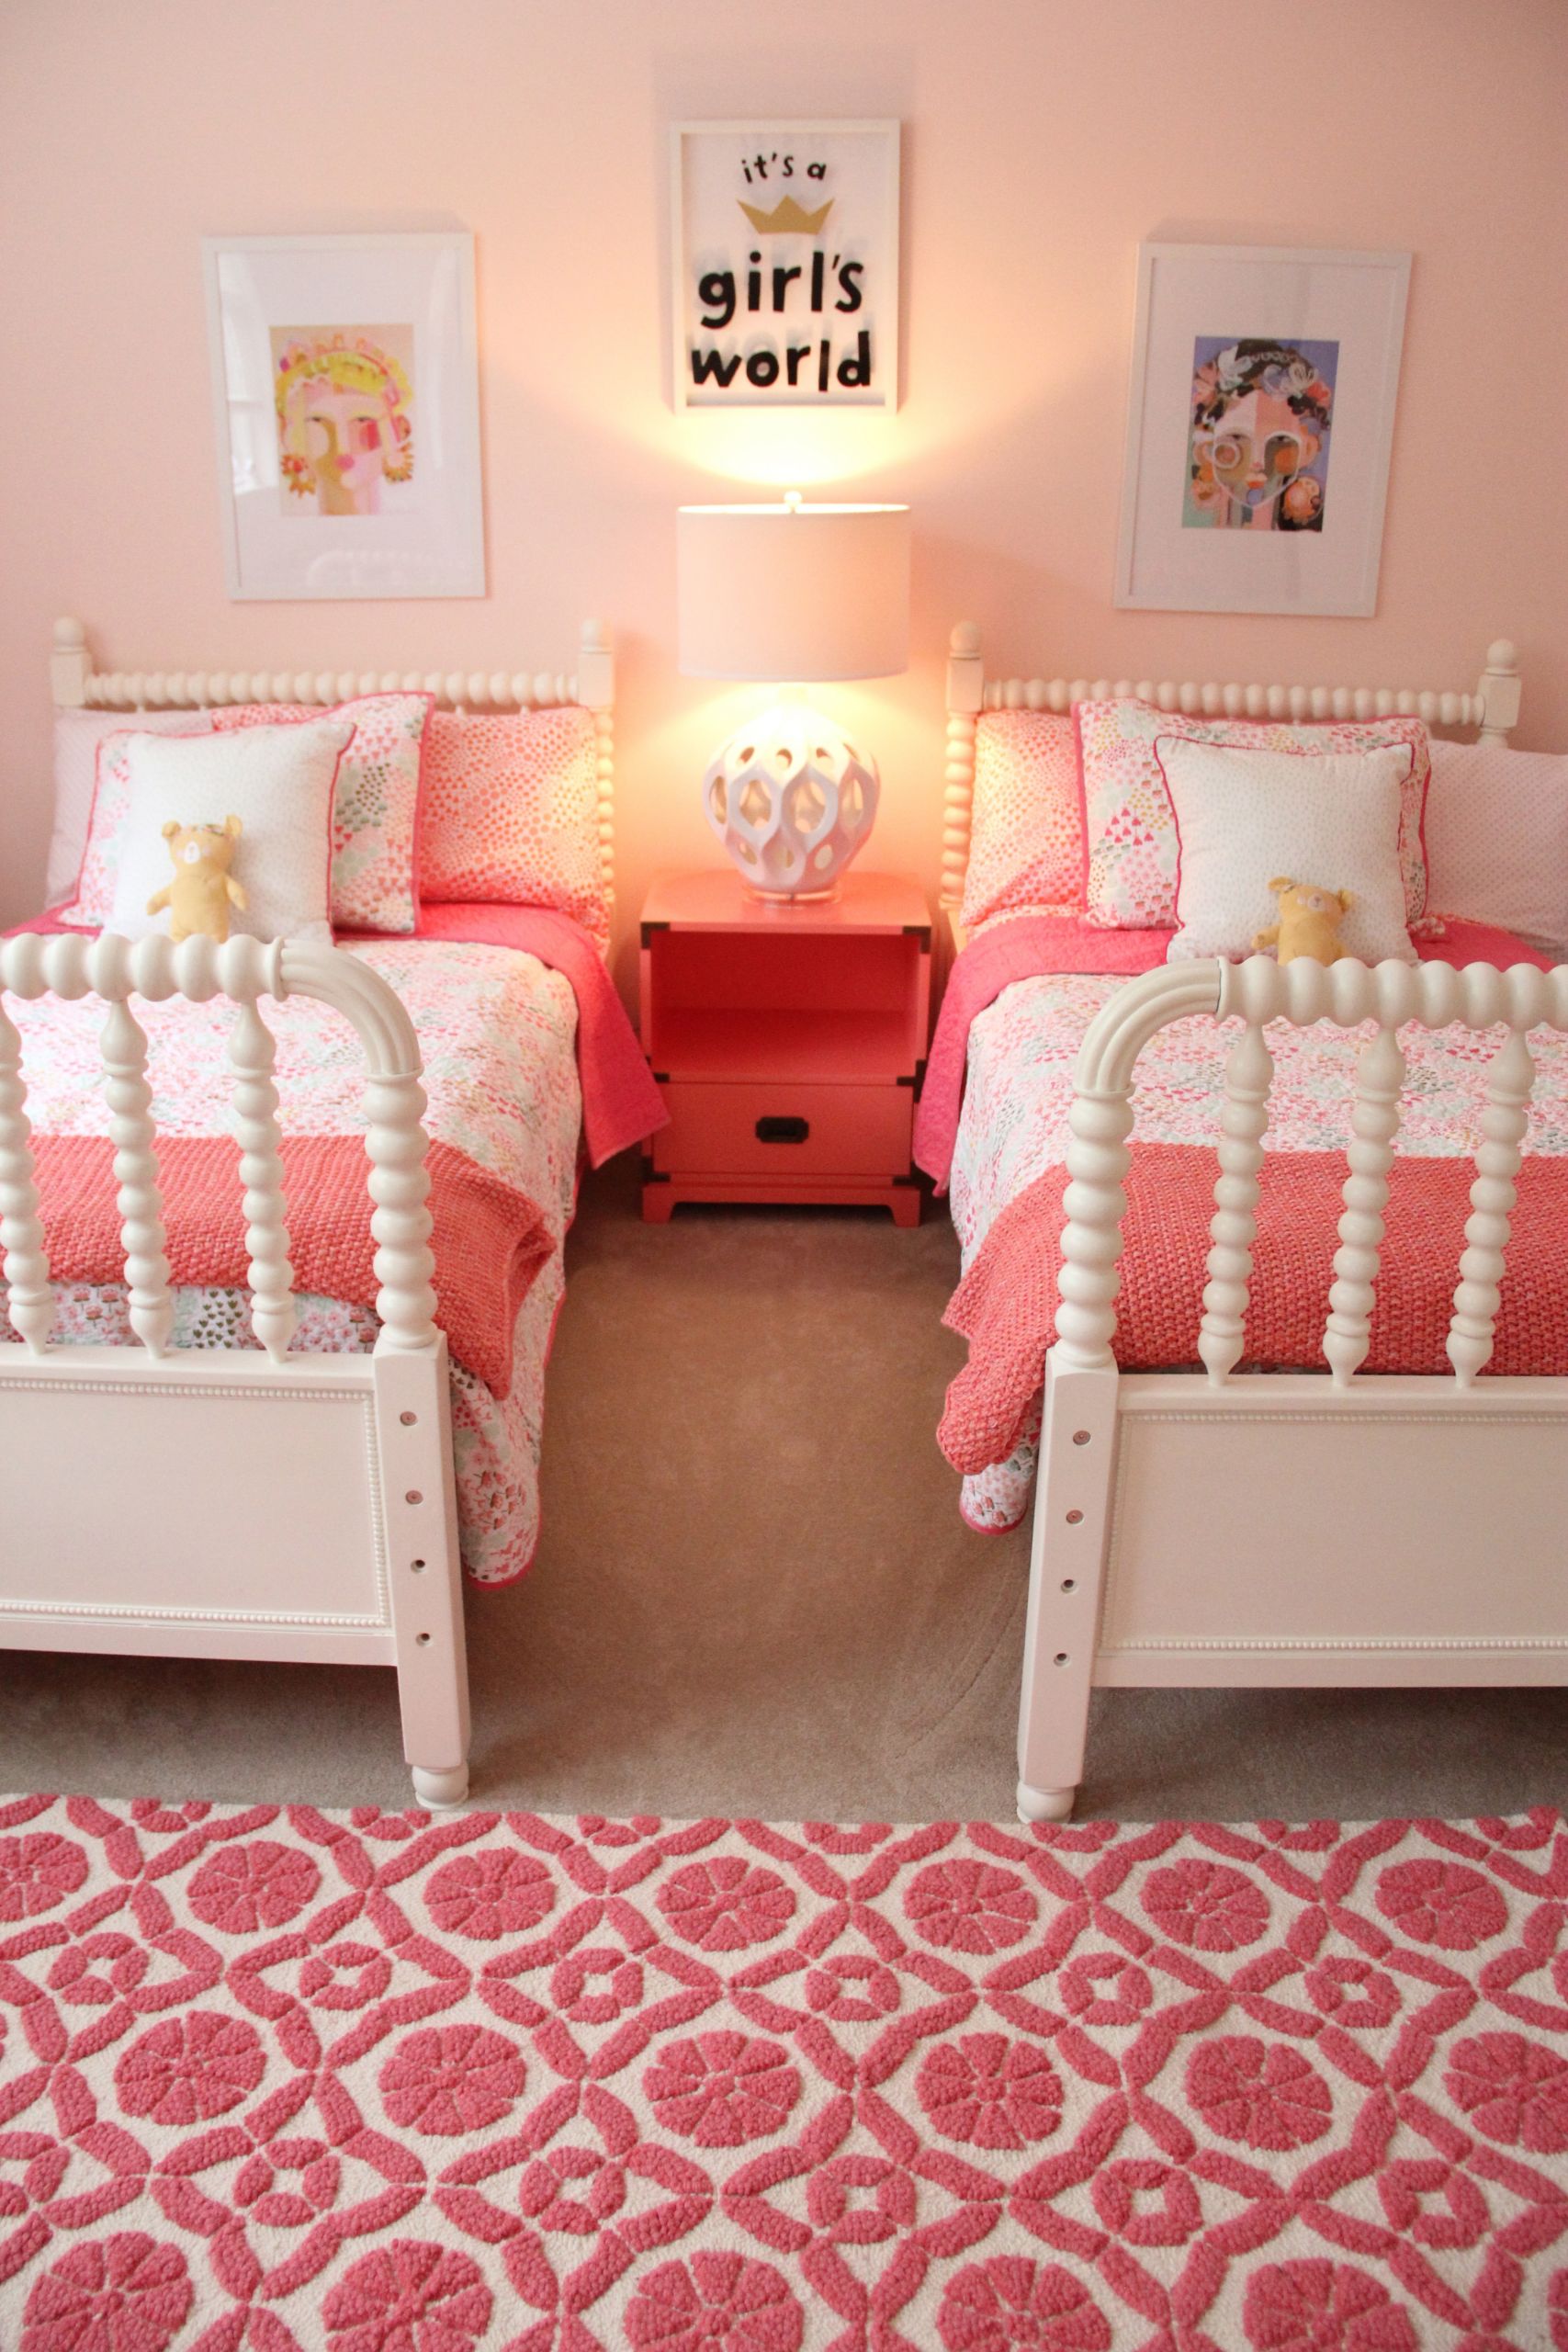 Small Girls Bedroom
 MONDAY MAKEOVER – SHARED LITTLE GIRLS ROOM